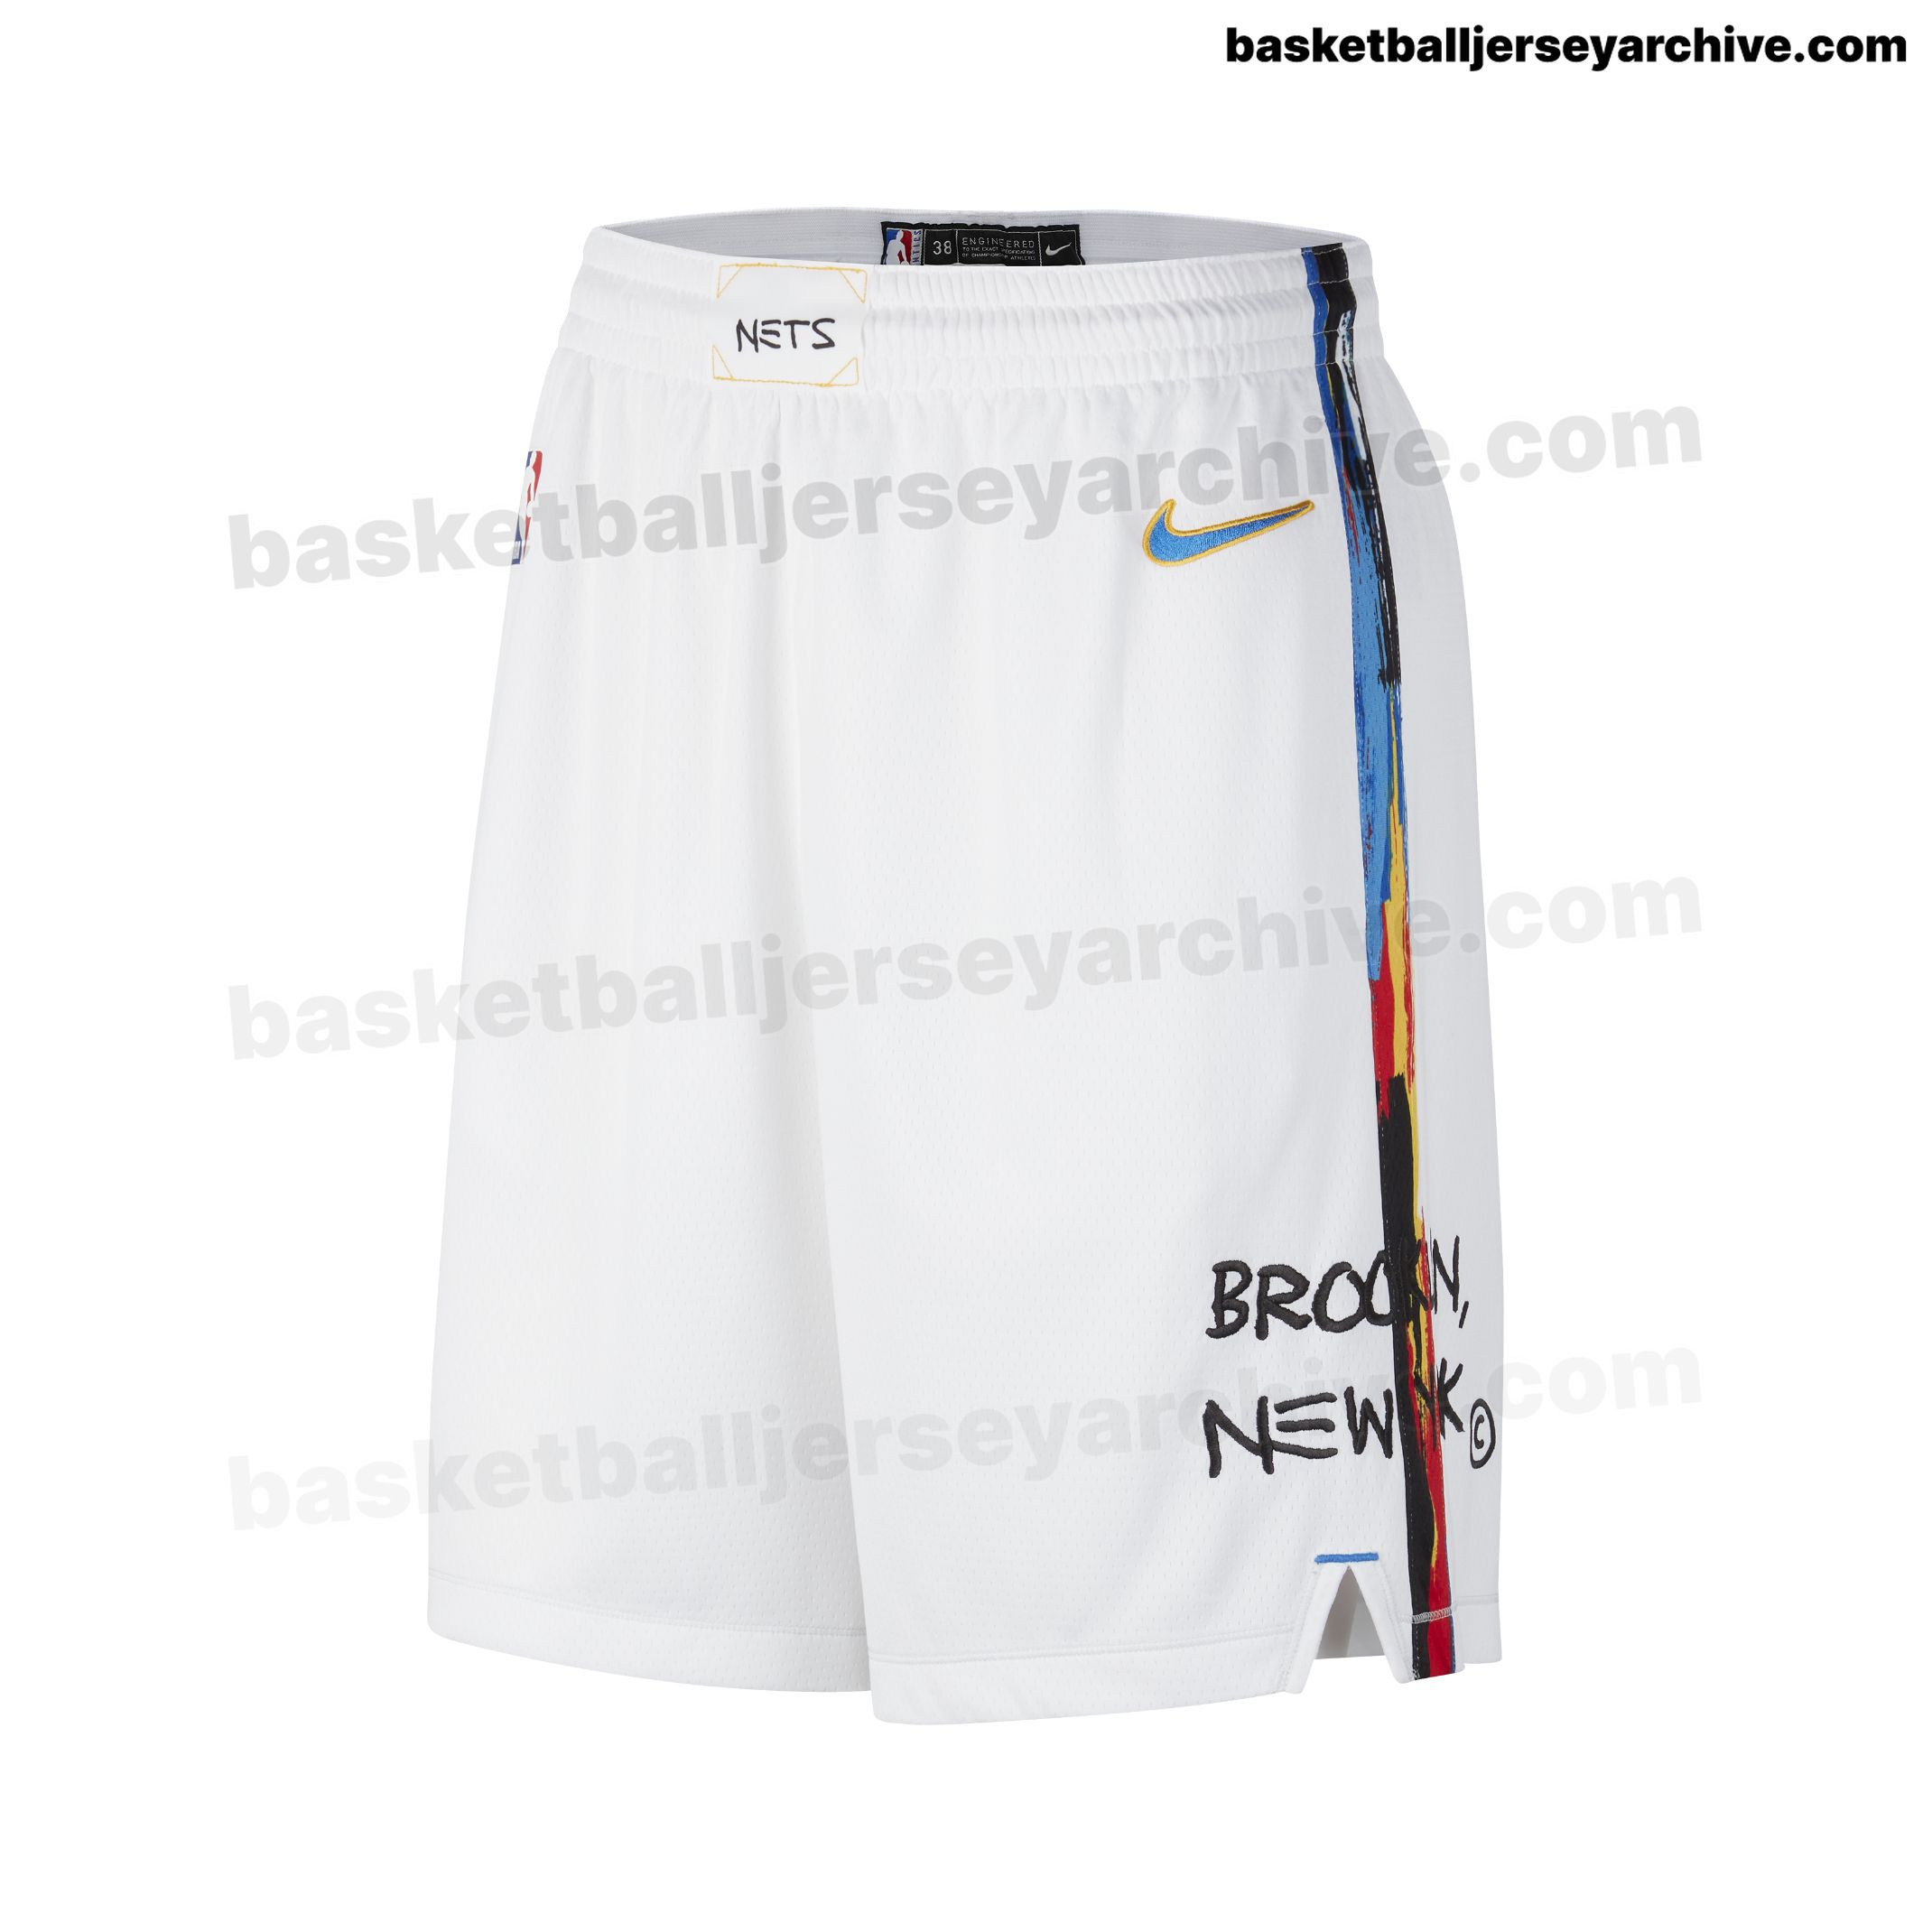 Nets unveil 2022-23 City Edition Uniform: White Basquiat-Inspired